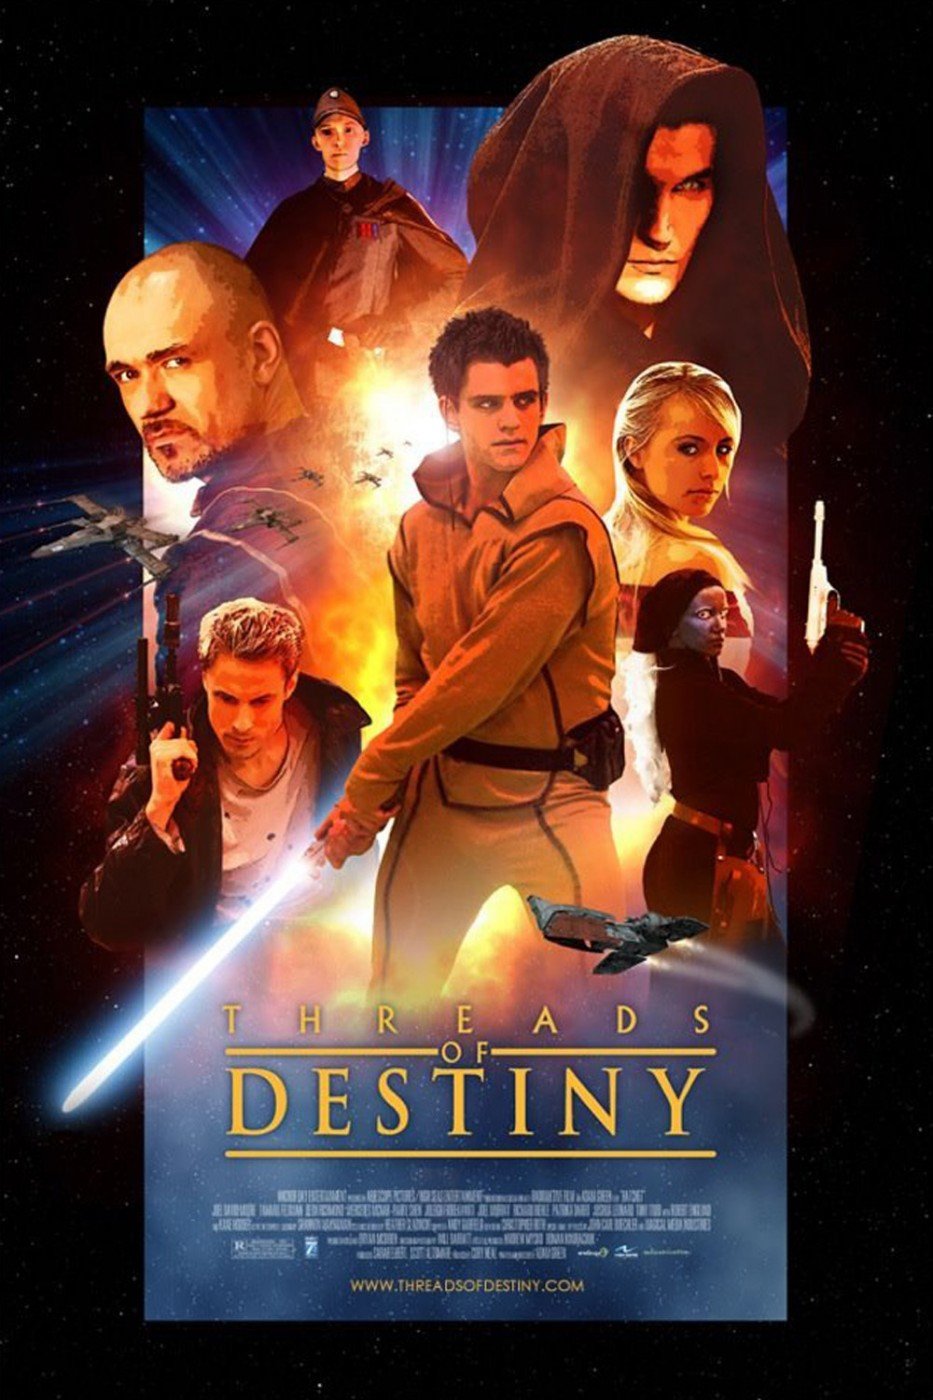 Star Wars: Threads of destiny